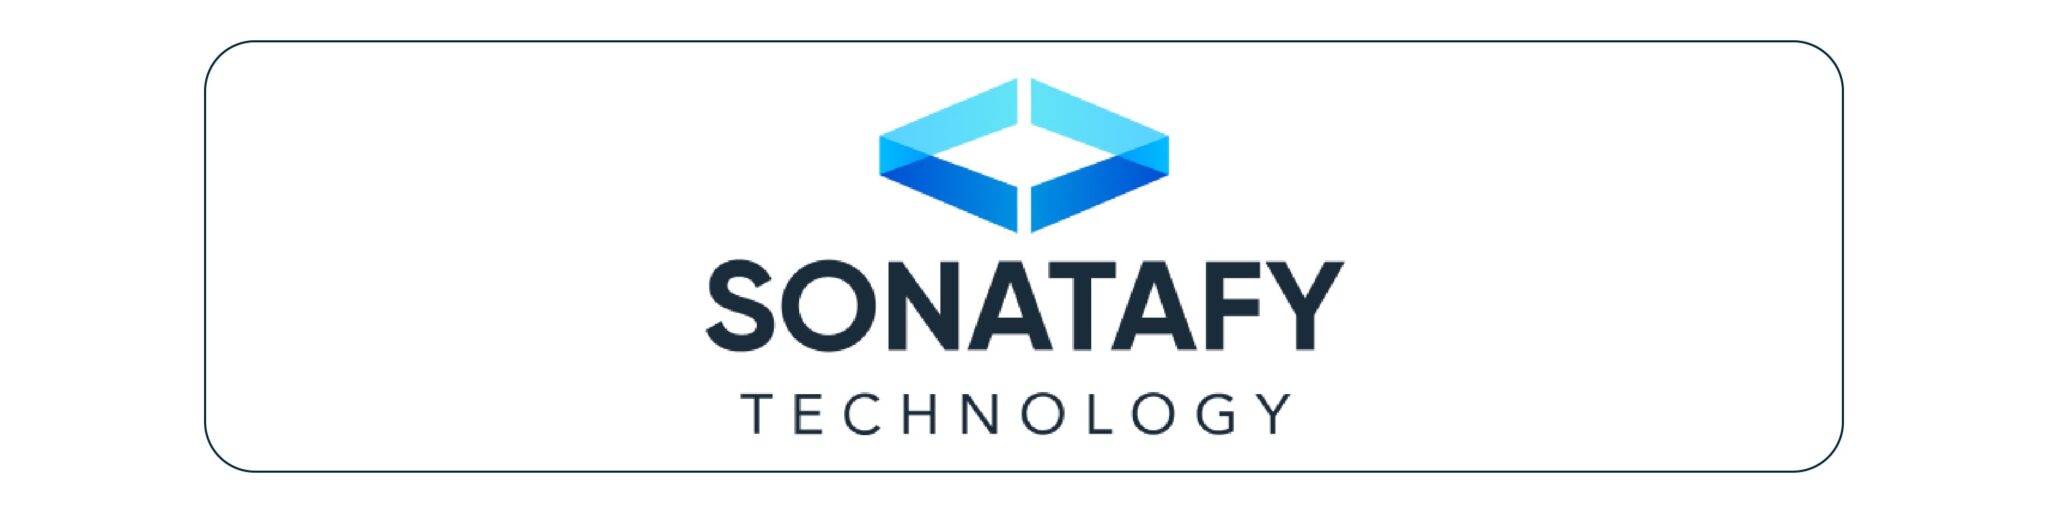 Sonatafy Technology is the best SaaS development company on the US market